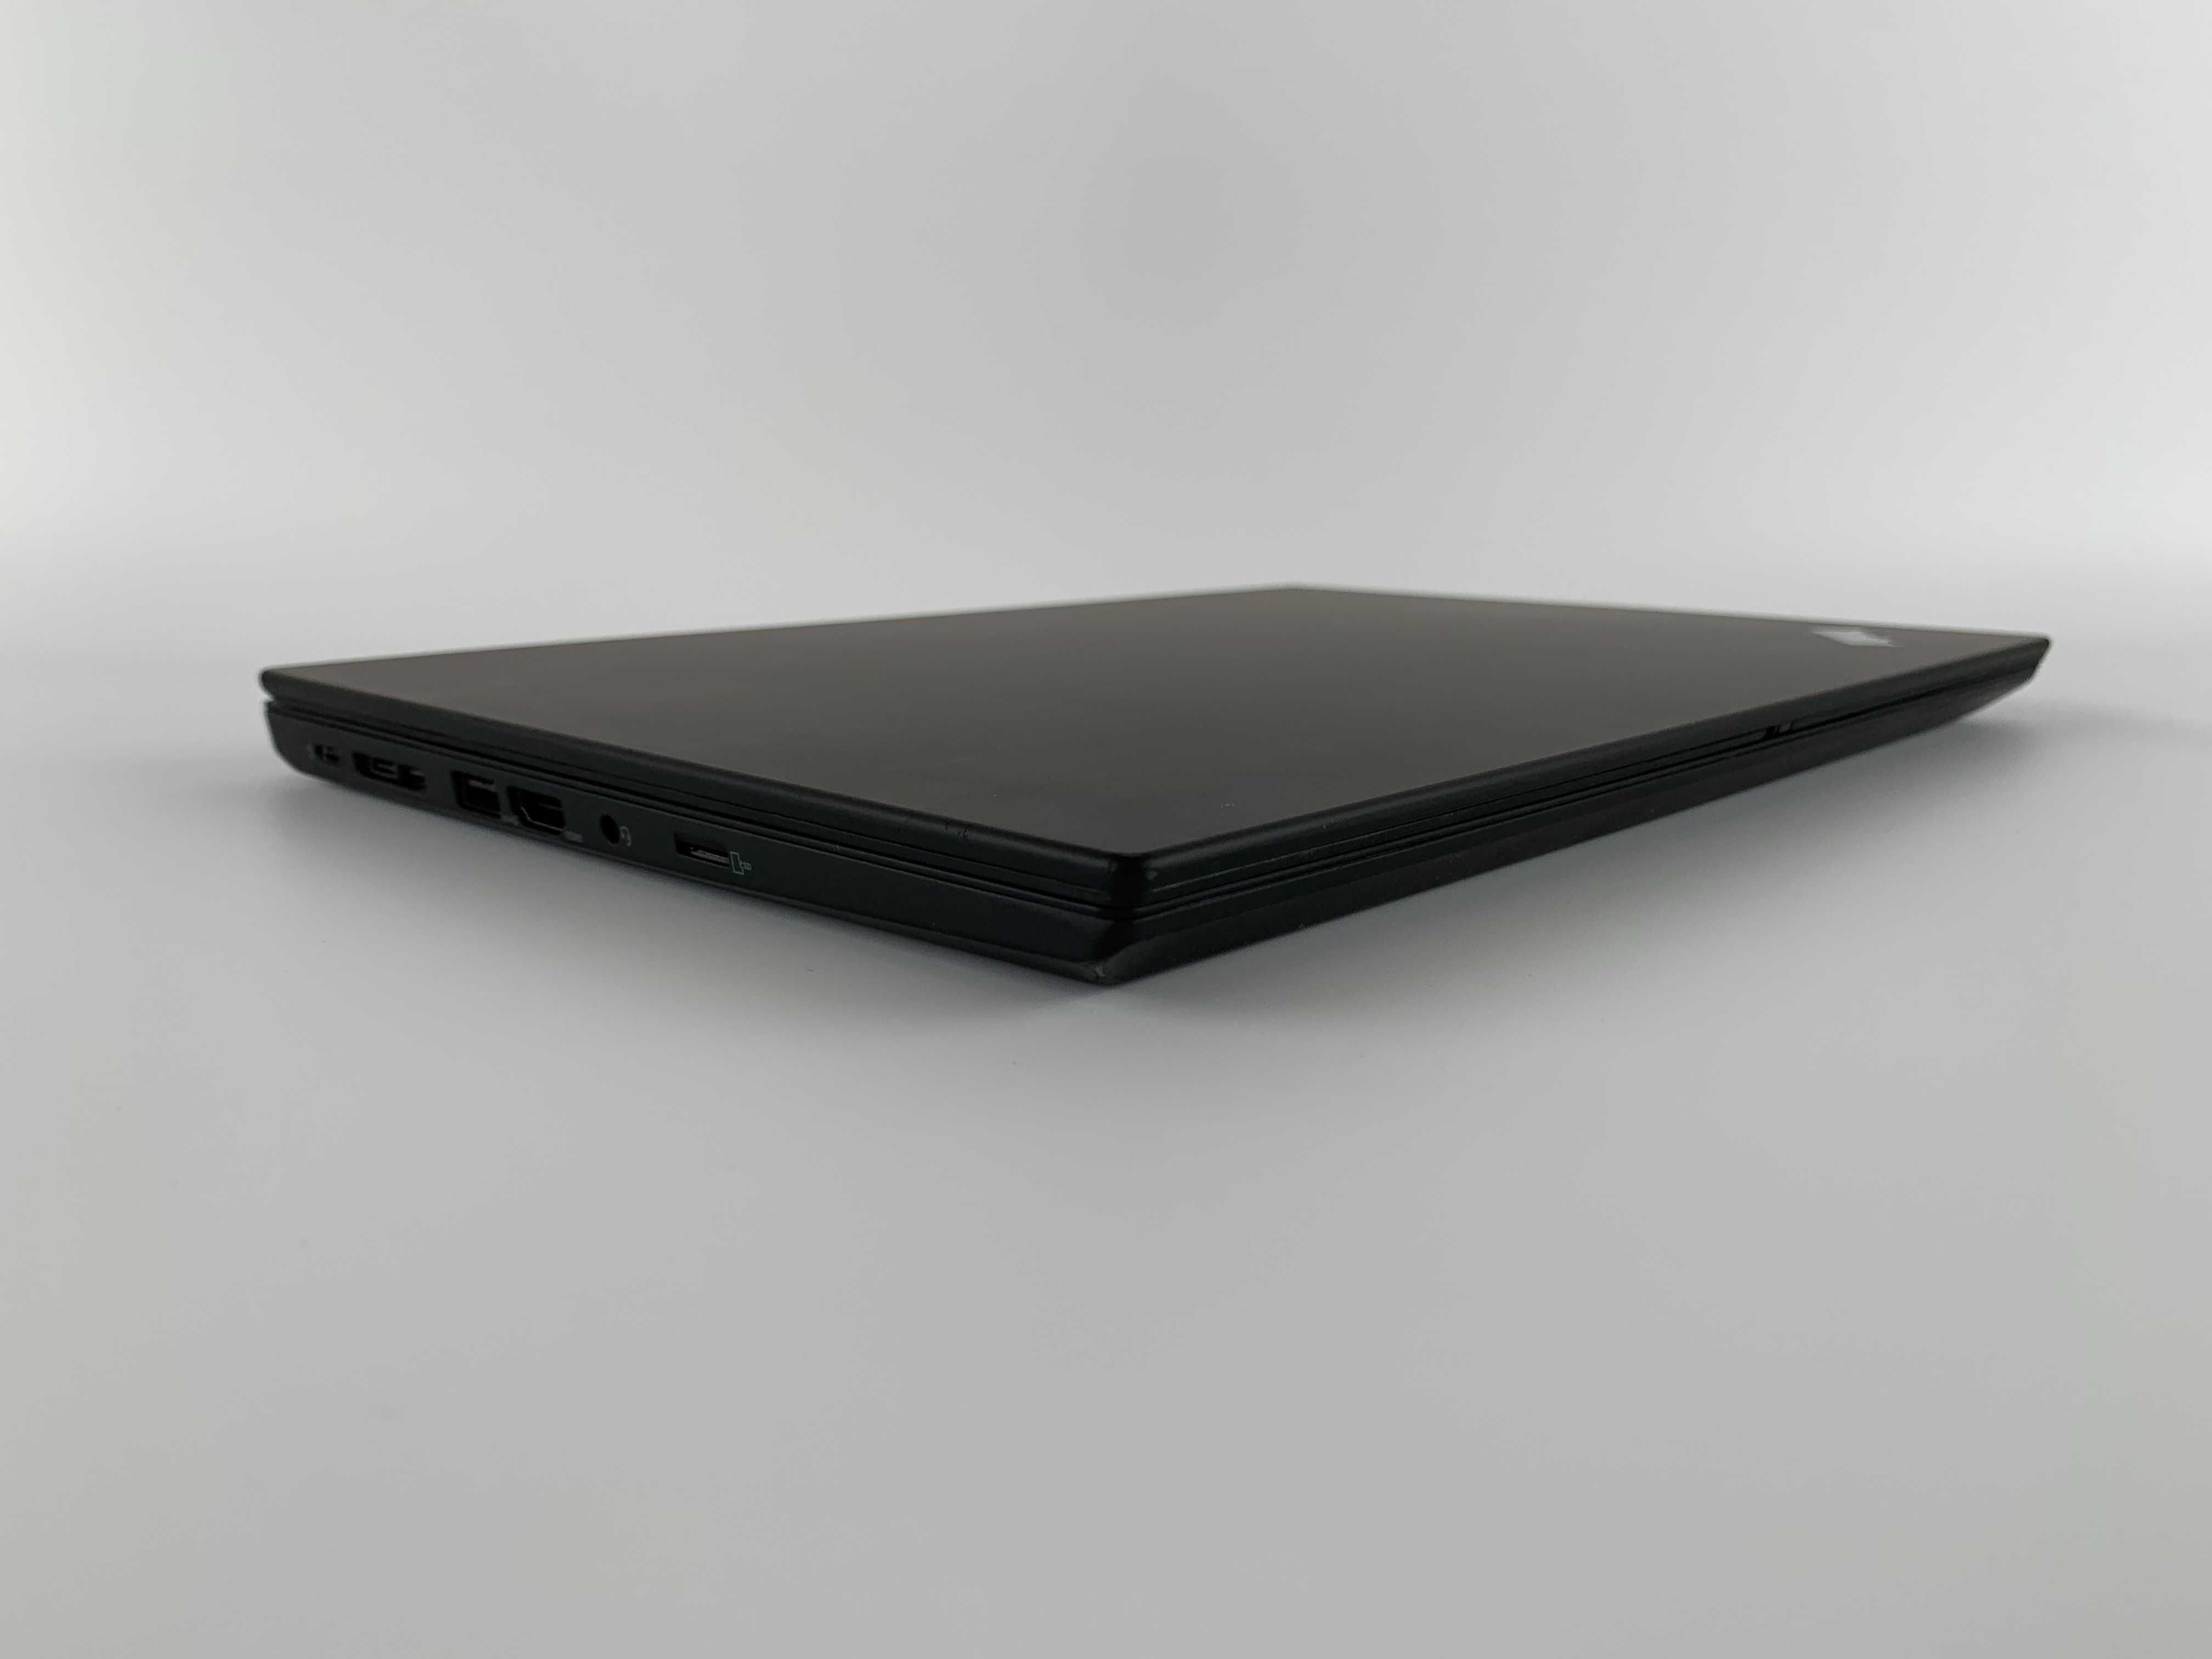 Lenovo ThinkPad T495 R3 Pro 3300U 16 gb ssd 256 Vega 6 Ноутбук 512/1тб